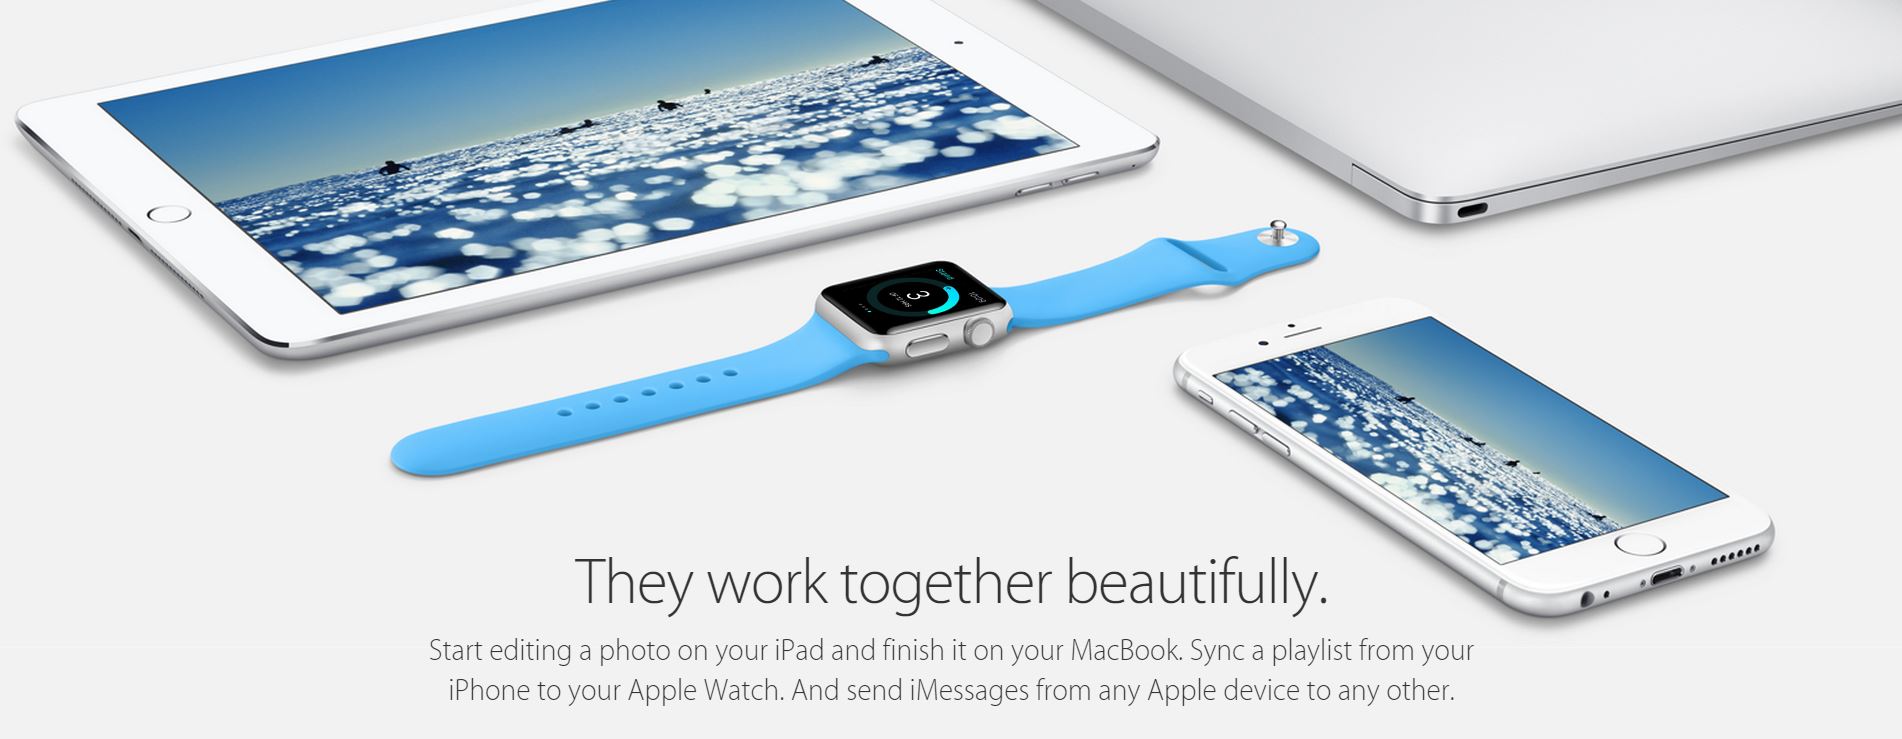 Apple Watch connectée iPhone Mac